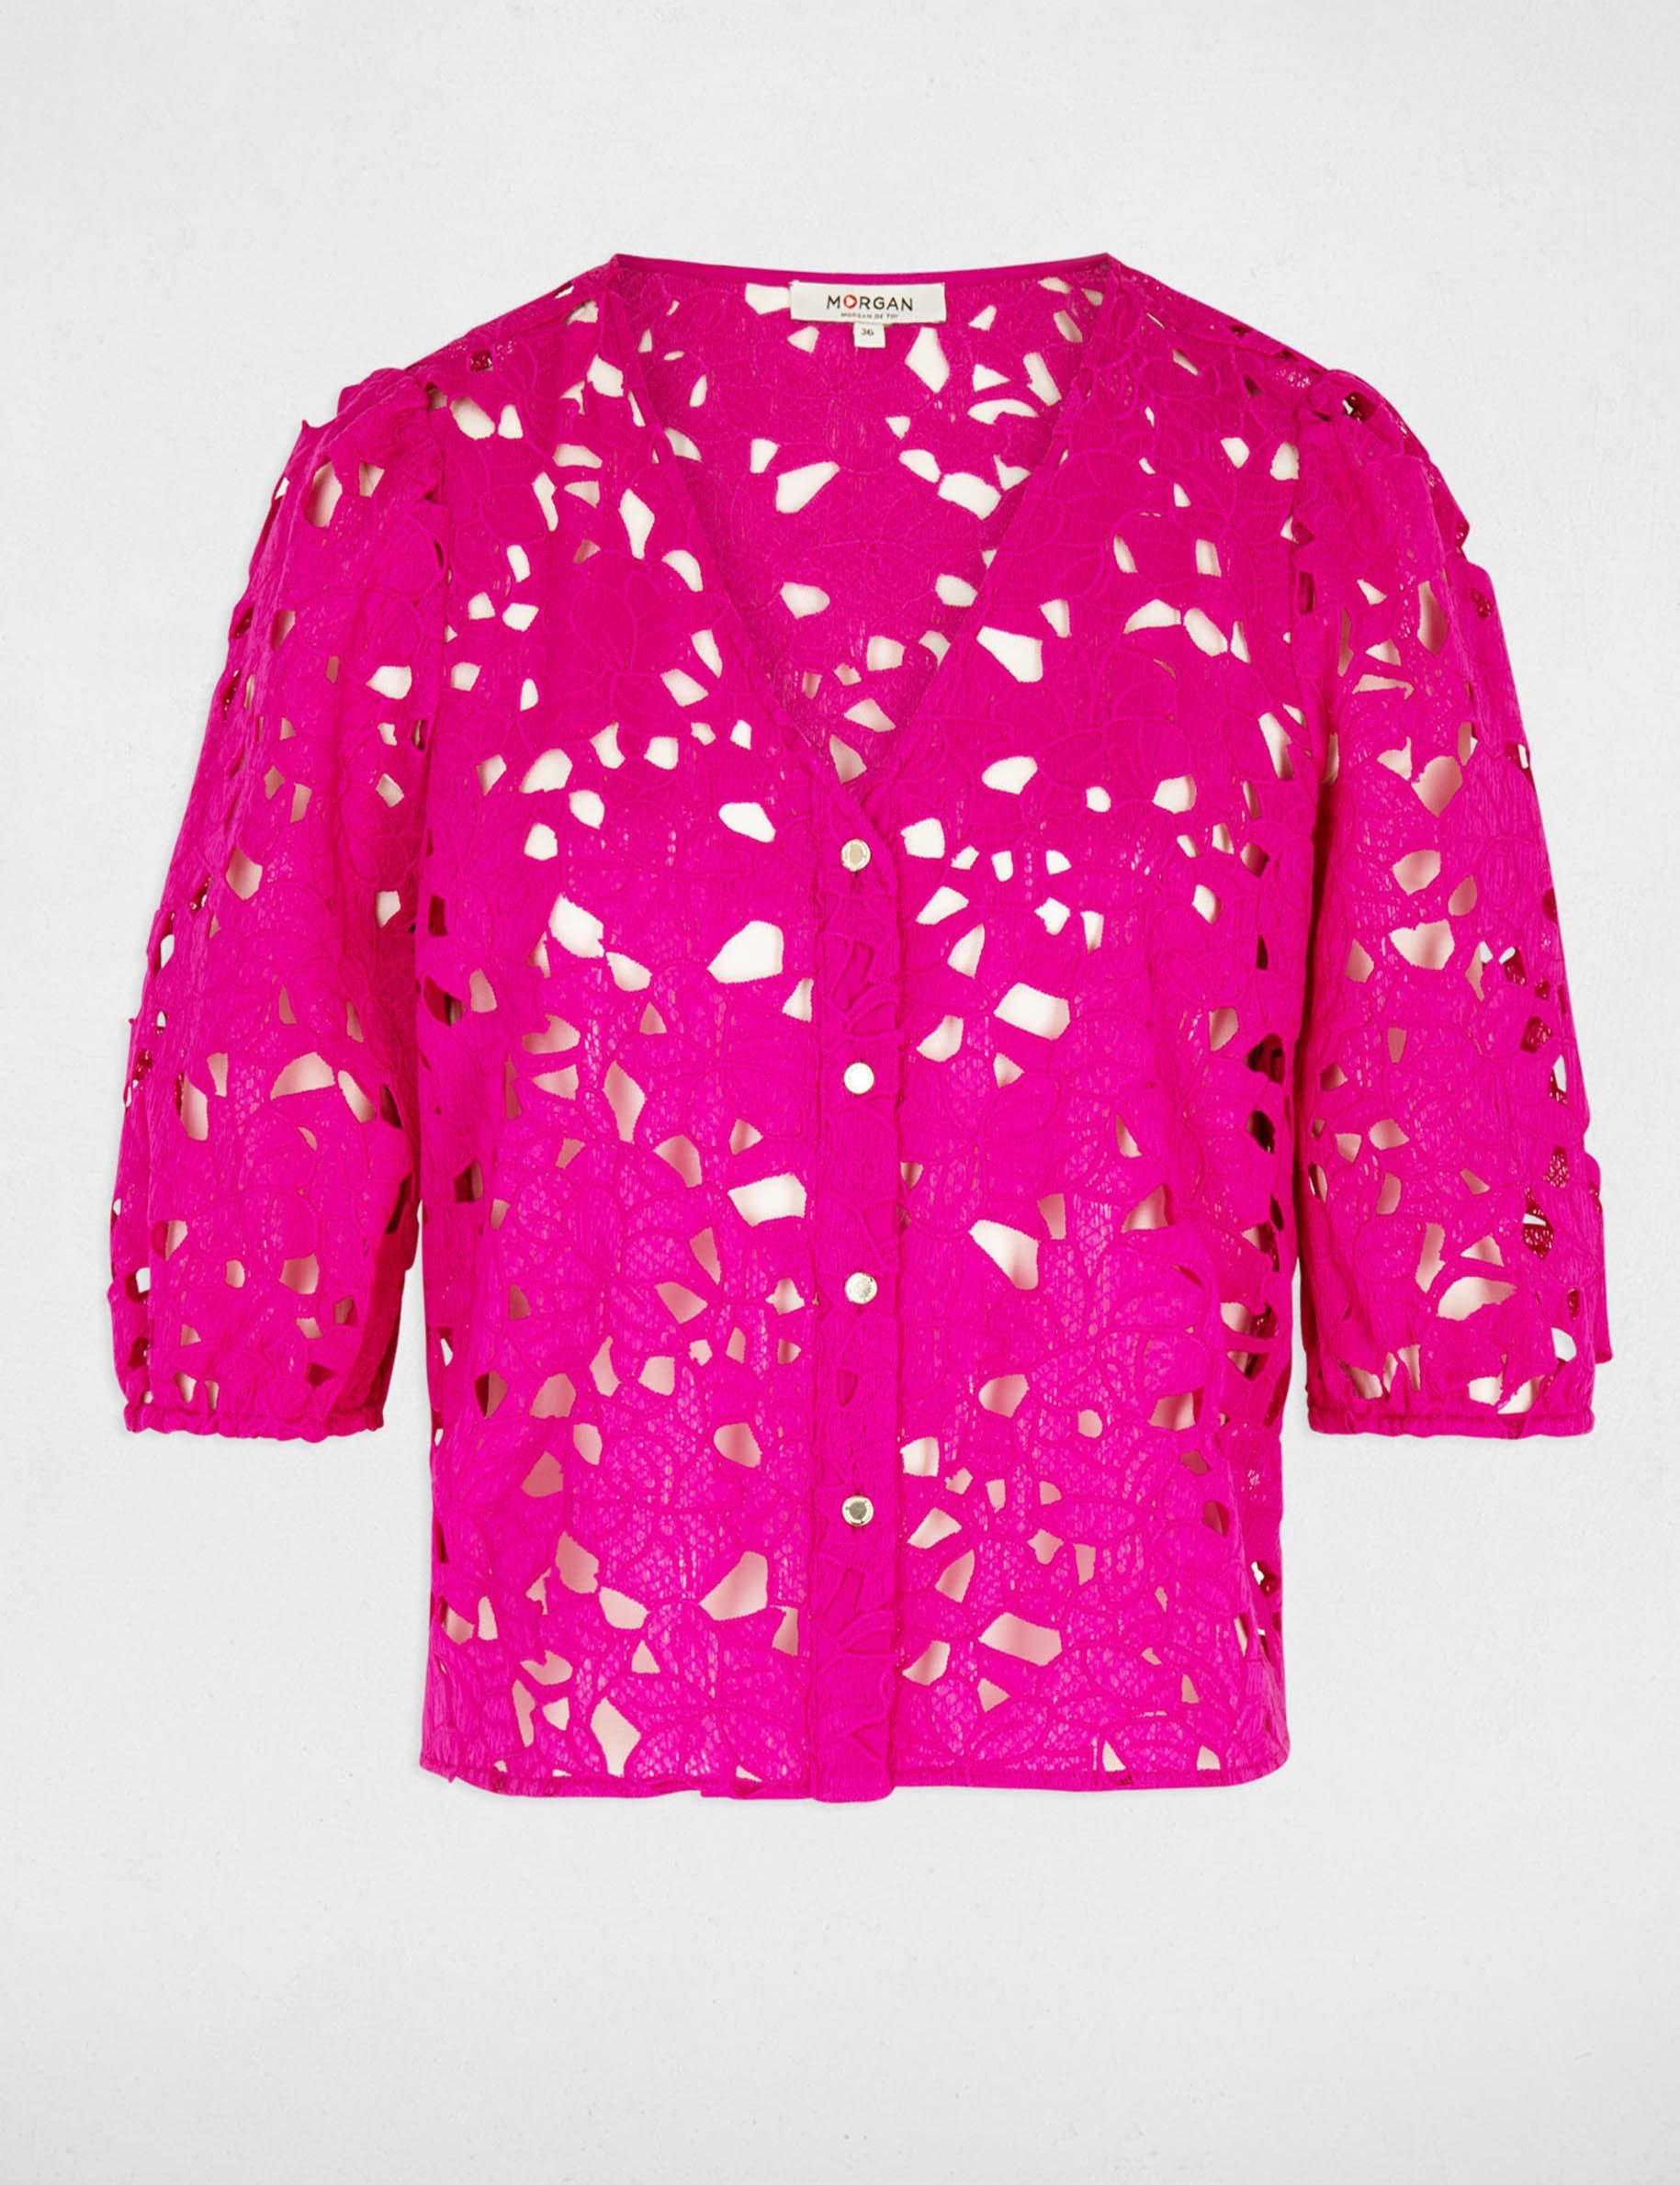 Lace shirt 3/4-length sleeves dark pink ladies'